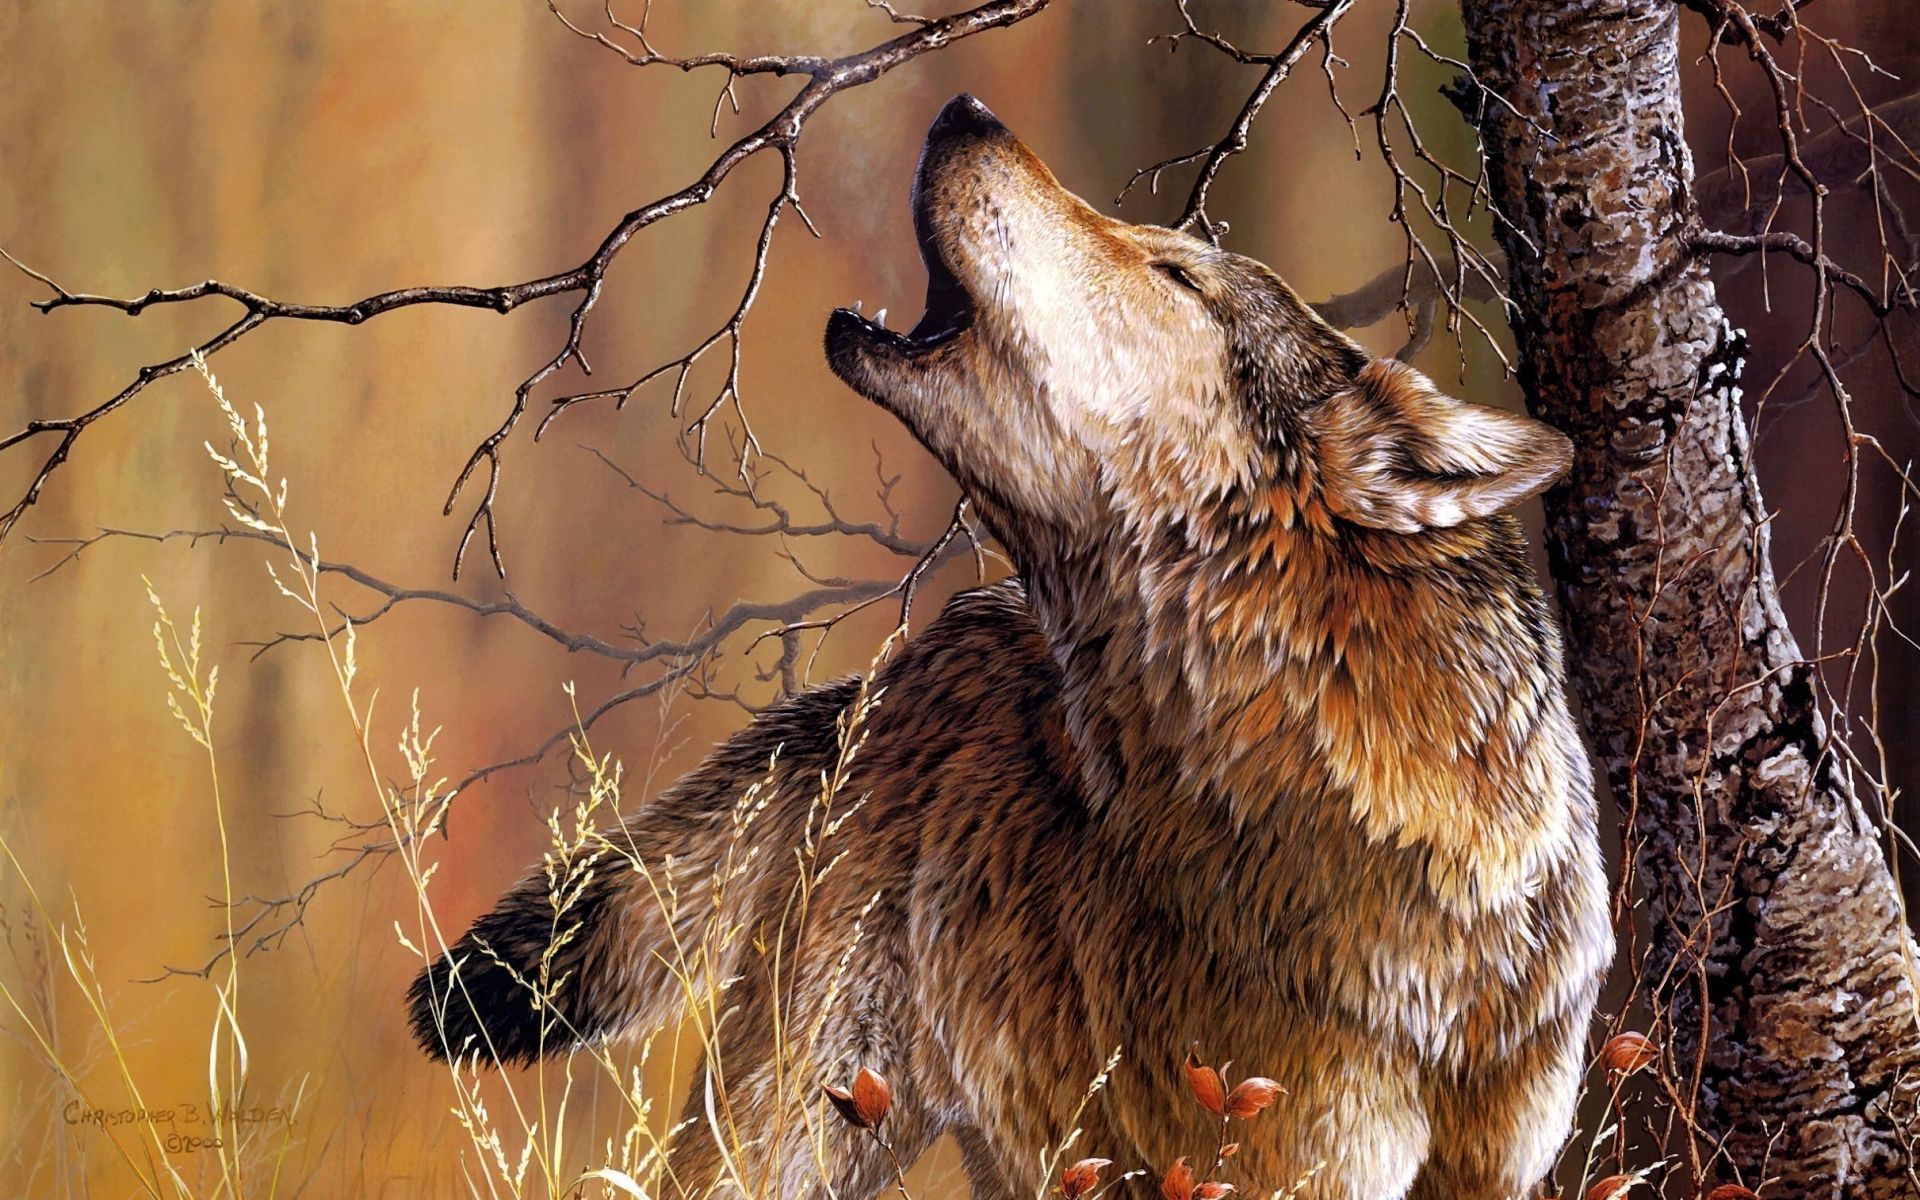 Pin van Lazar Cirkovic op wolves. Huilende wolf, Wolf tekening, Dieren